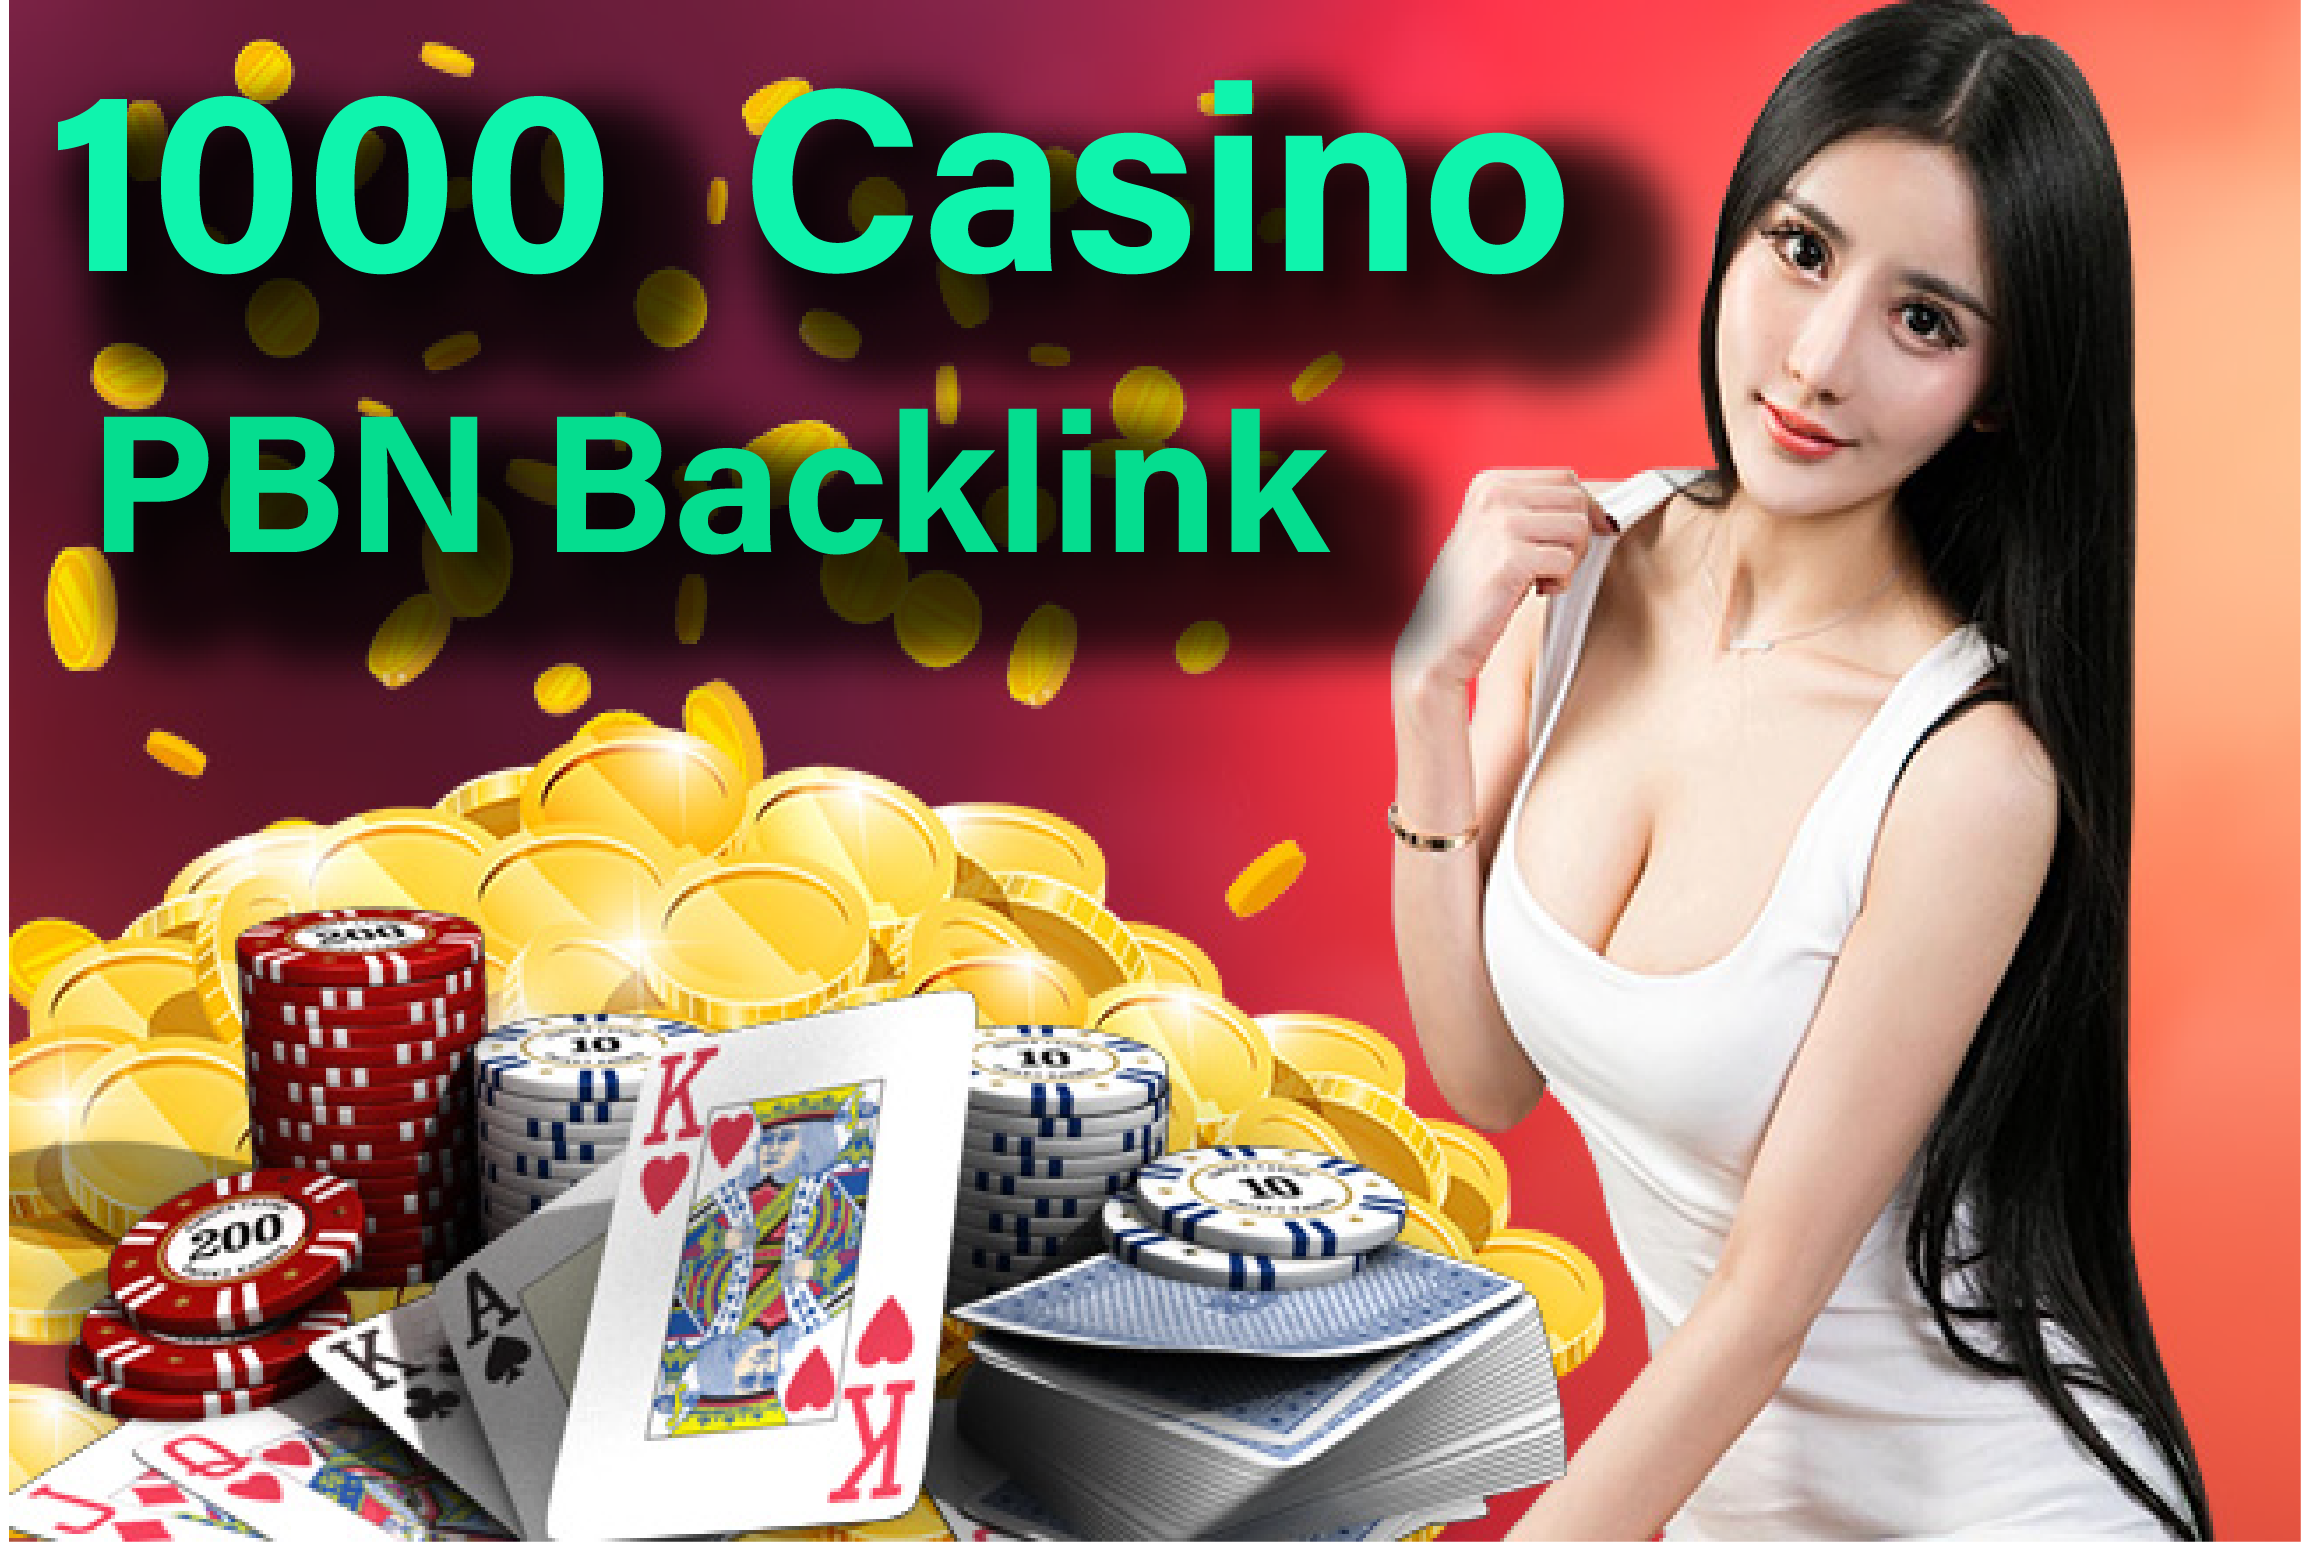 Skyrocket Thai Korean Casino 1000 PBN DA 80,to,DA 50 Gaming,Poker,Slot TOP GOOGLE RANK BACKLINK